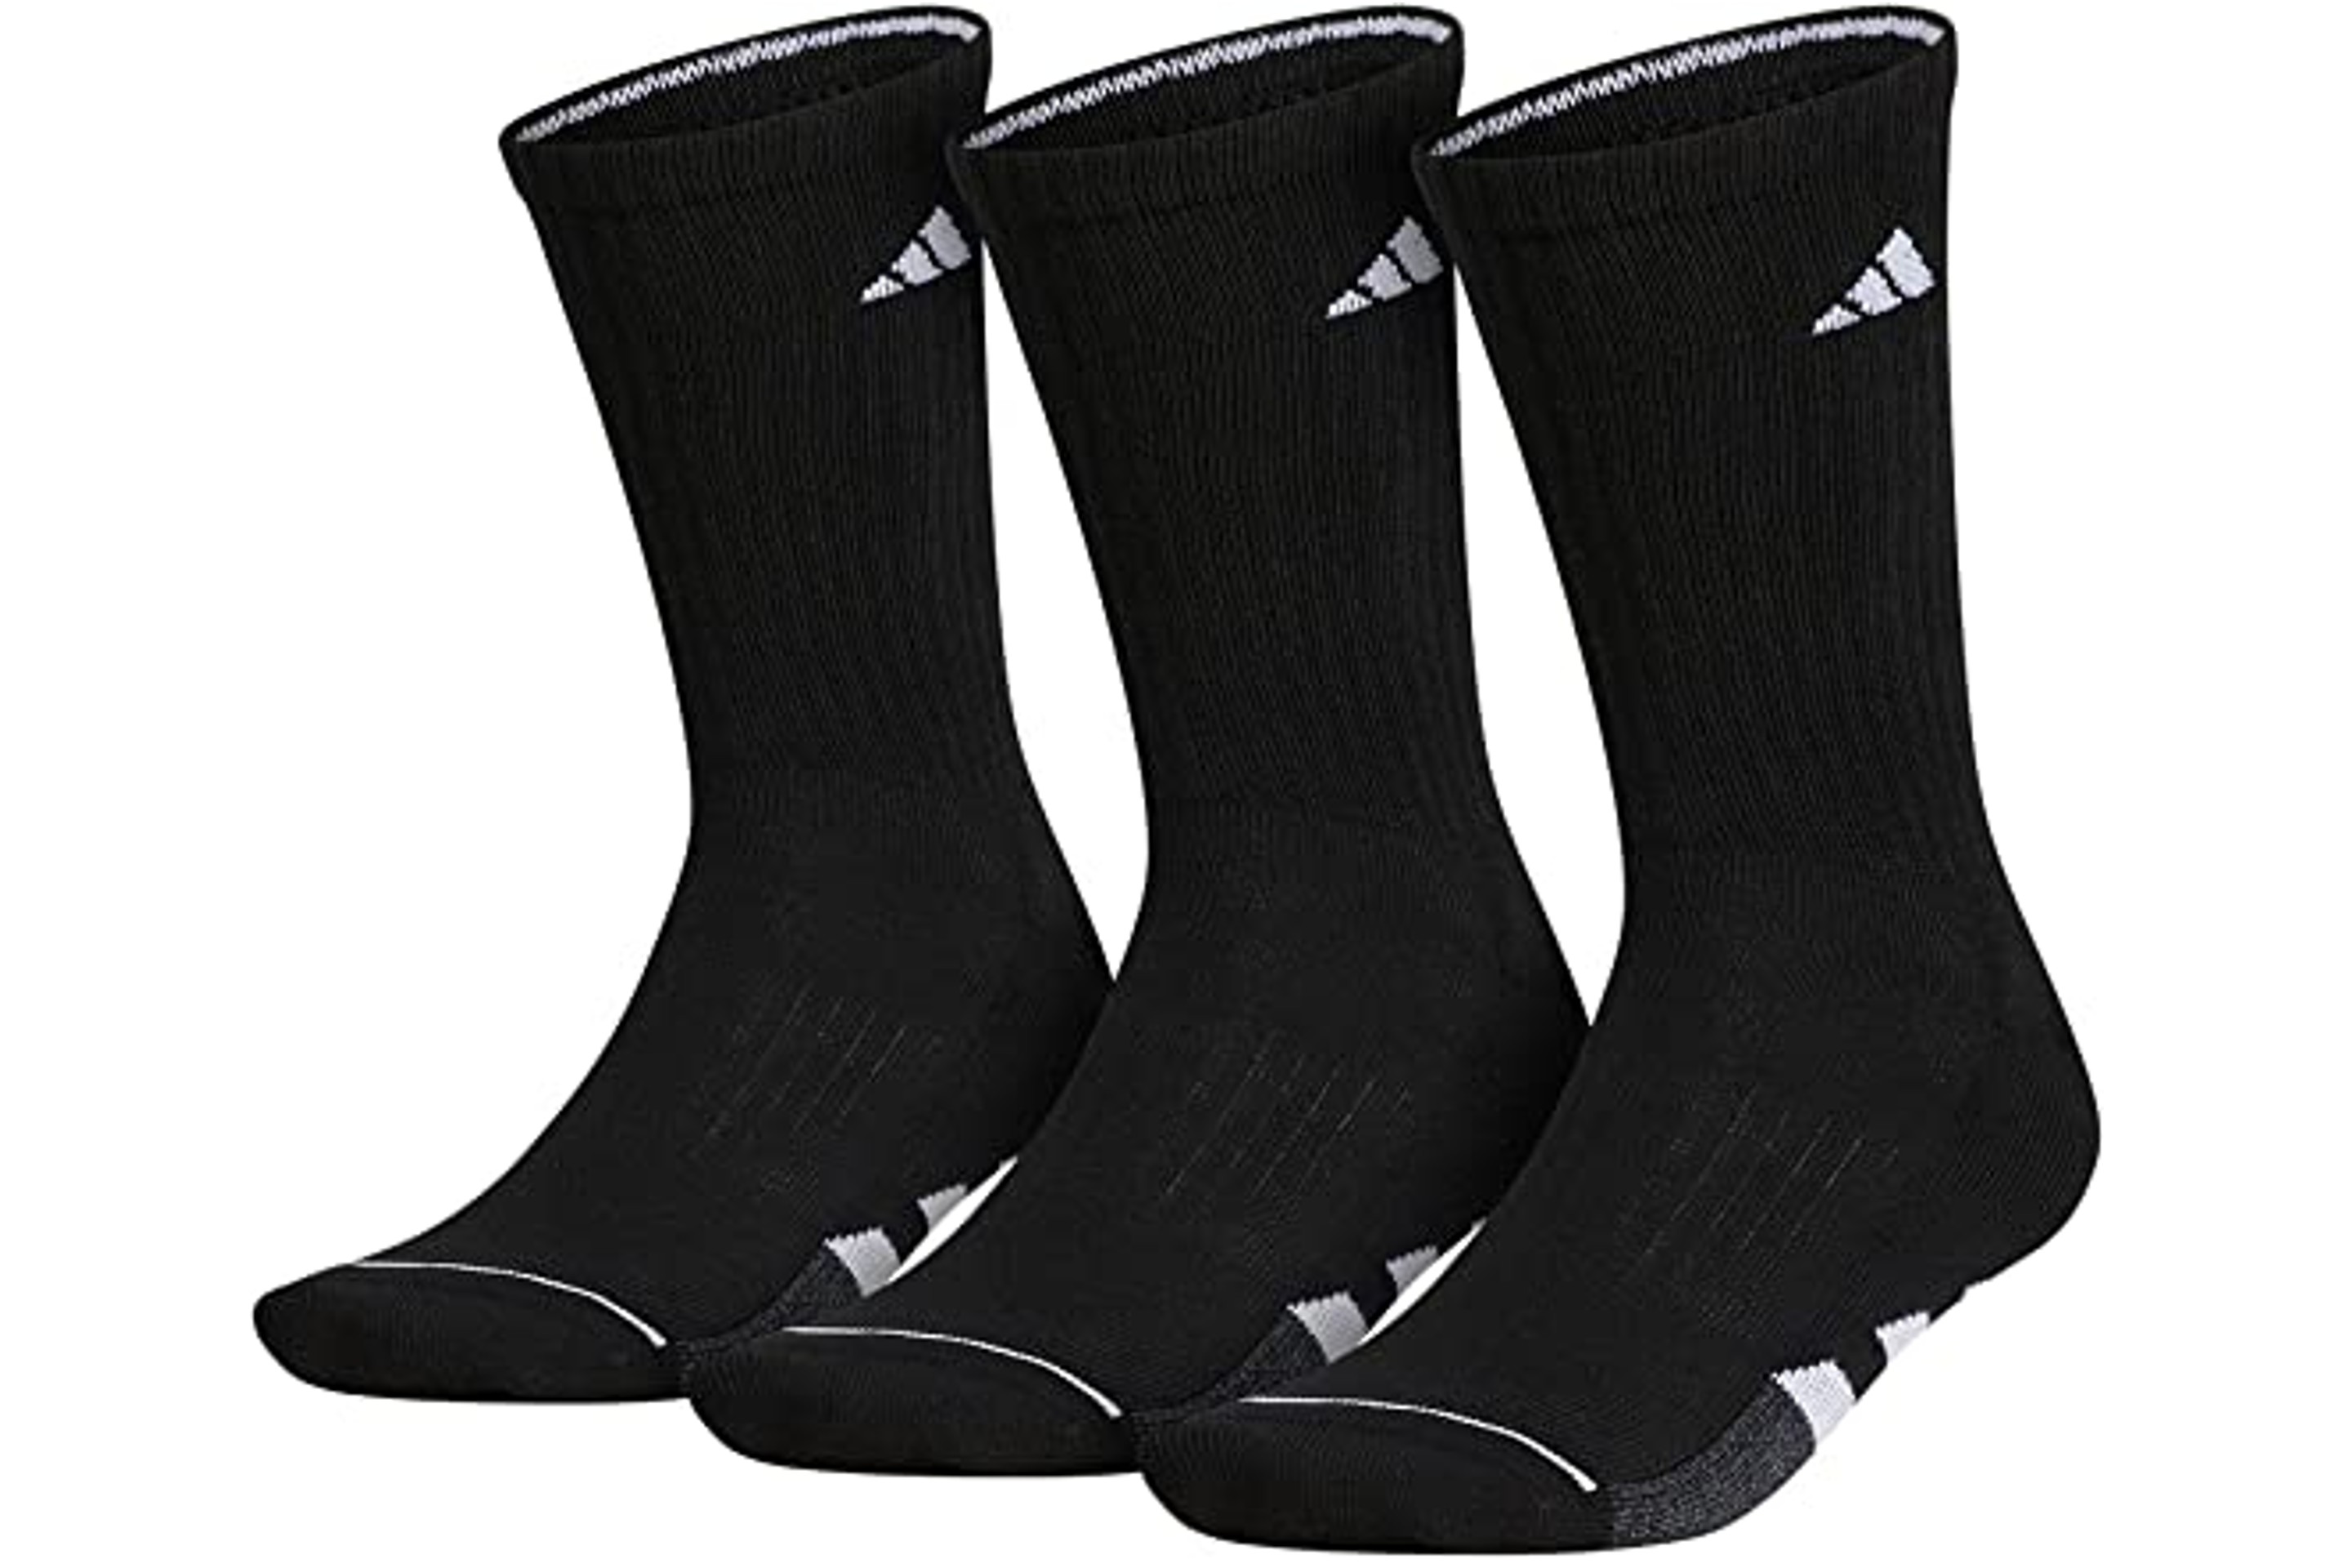 Adidas Men's Cushioned Crew Socks